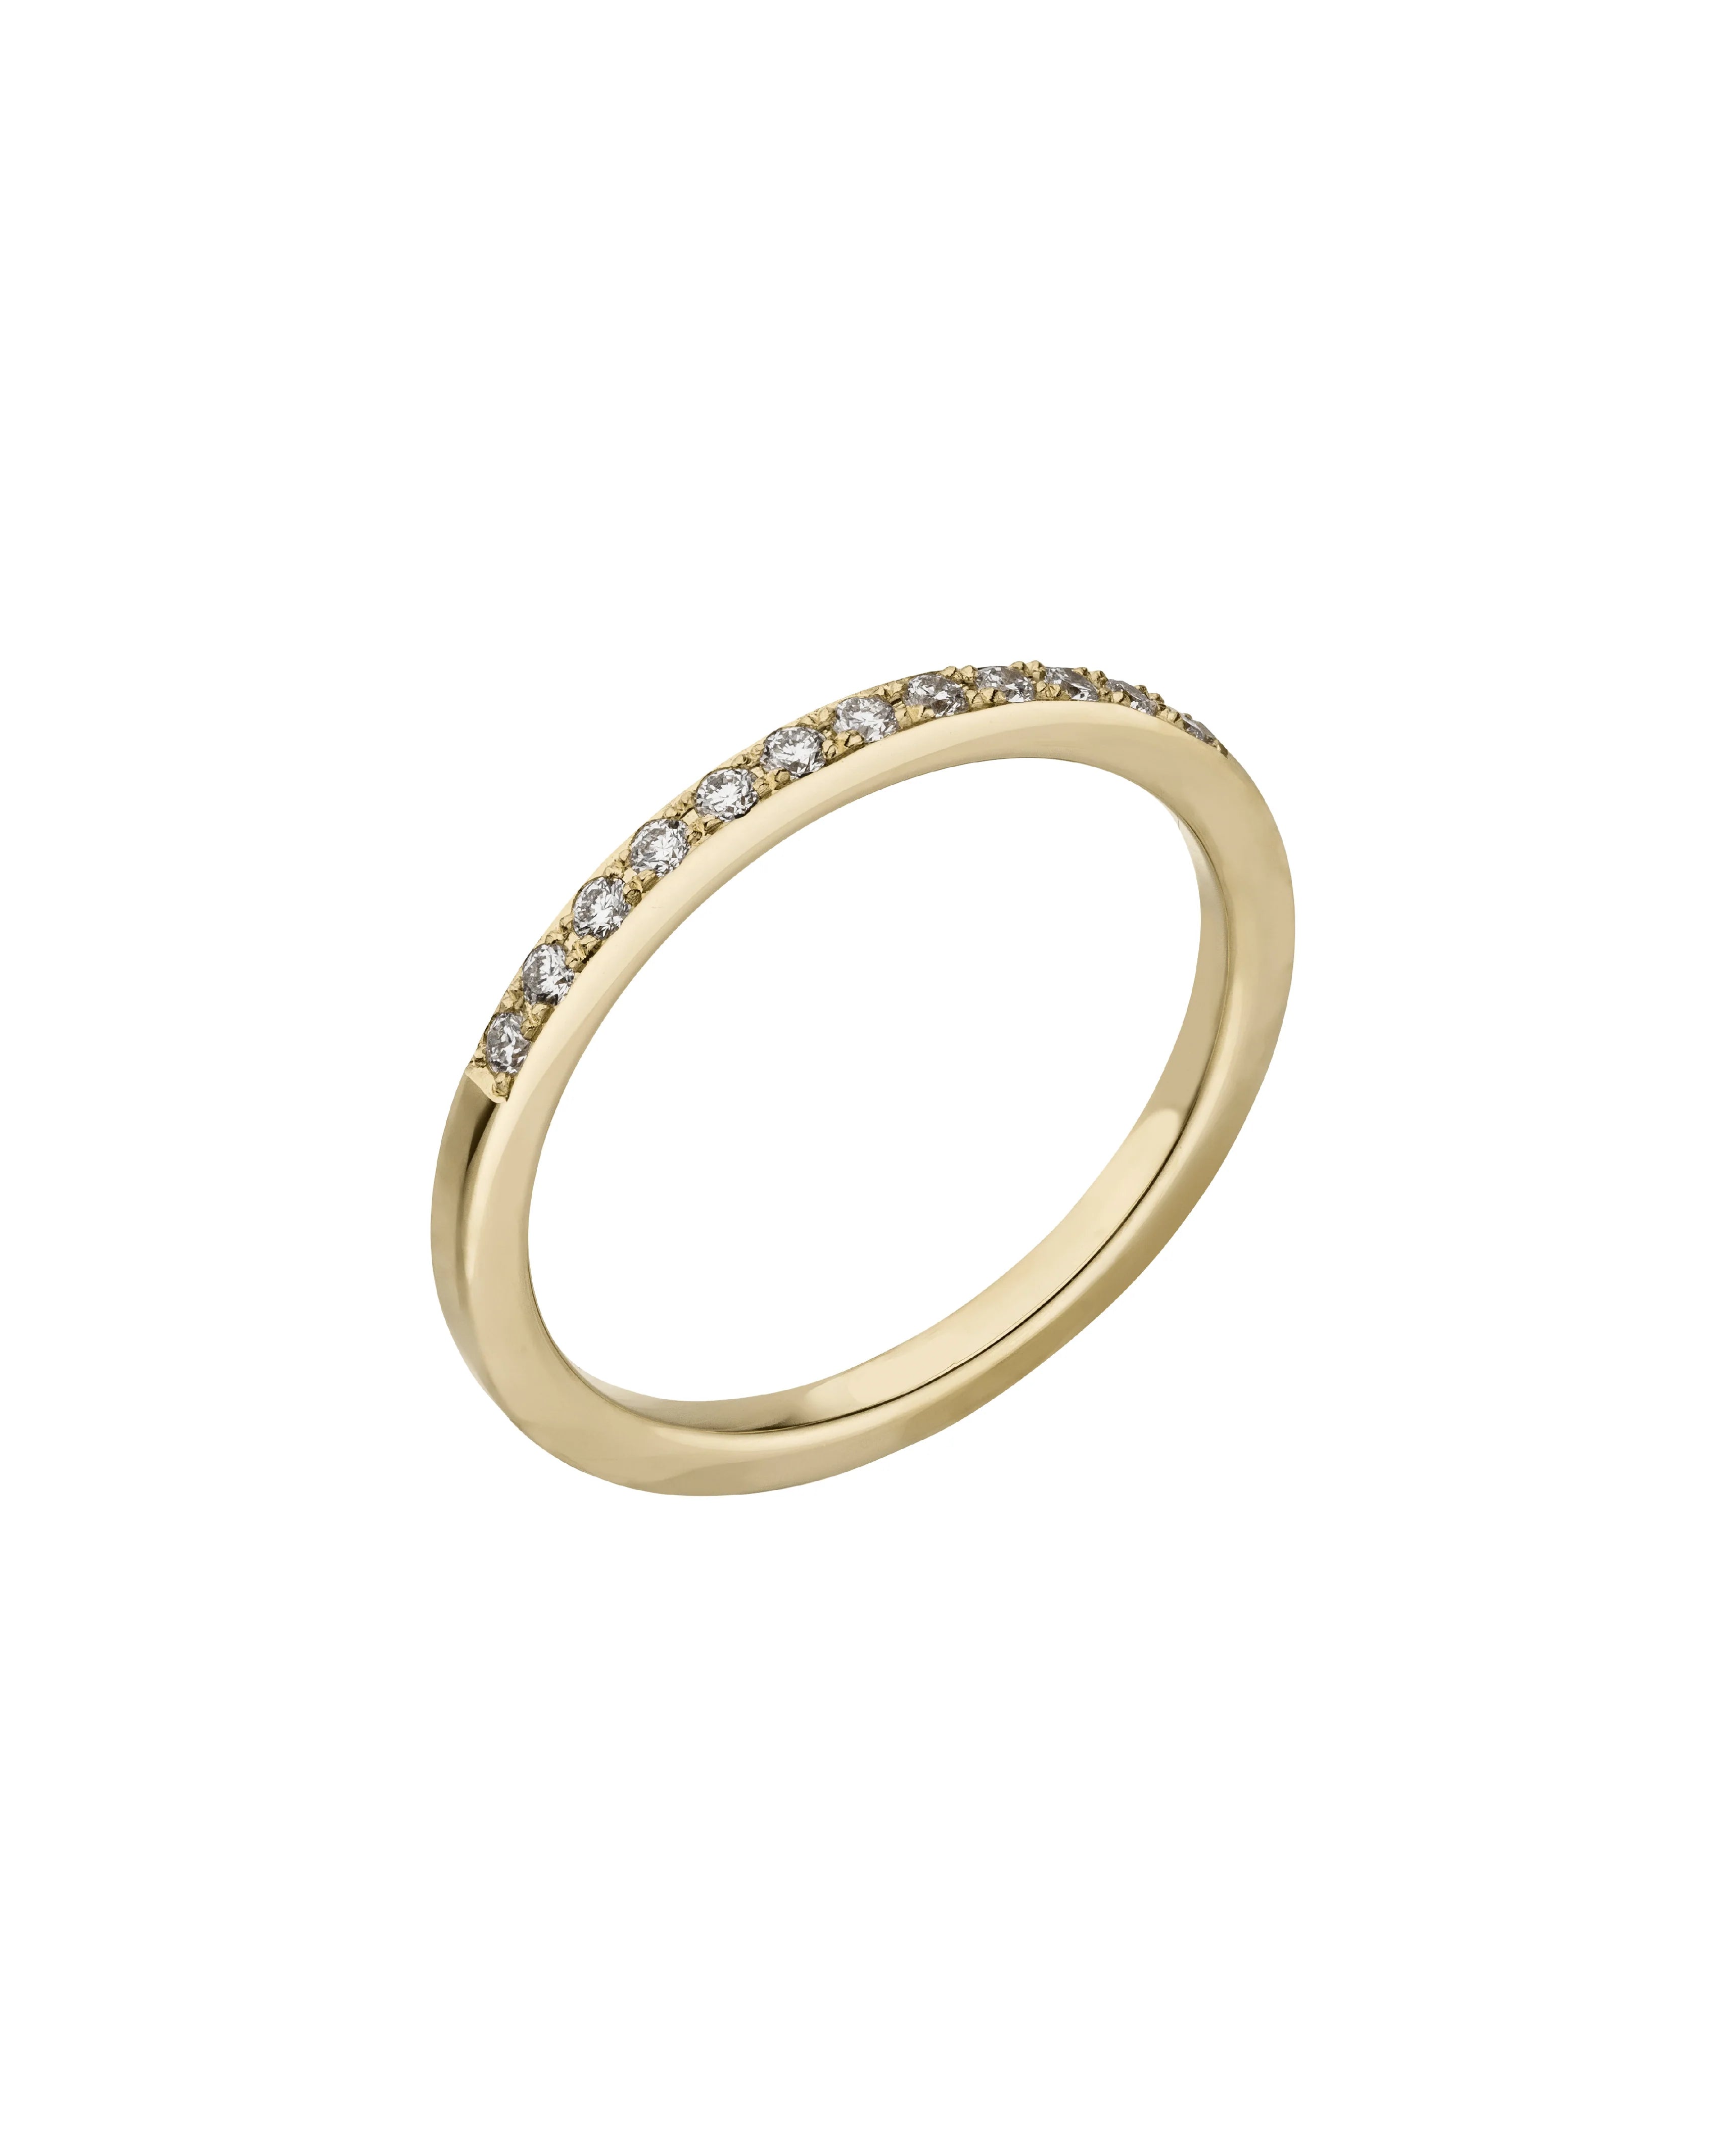 GRACIOSA - Gold Ring - Gelbgold 585